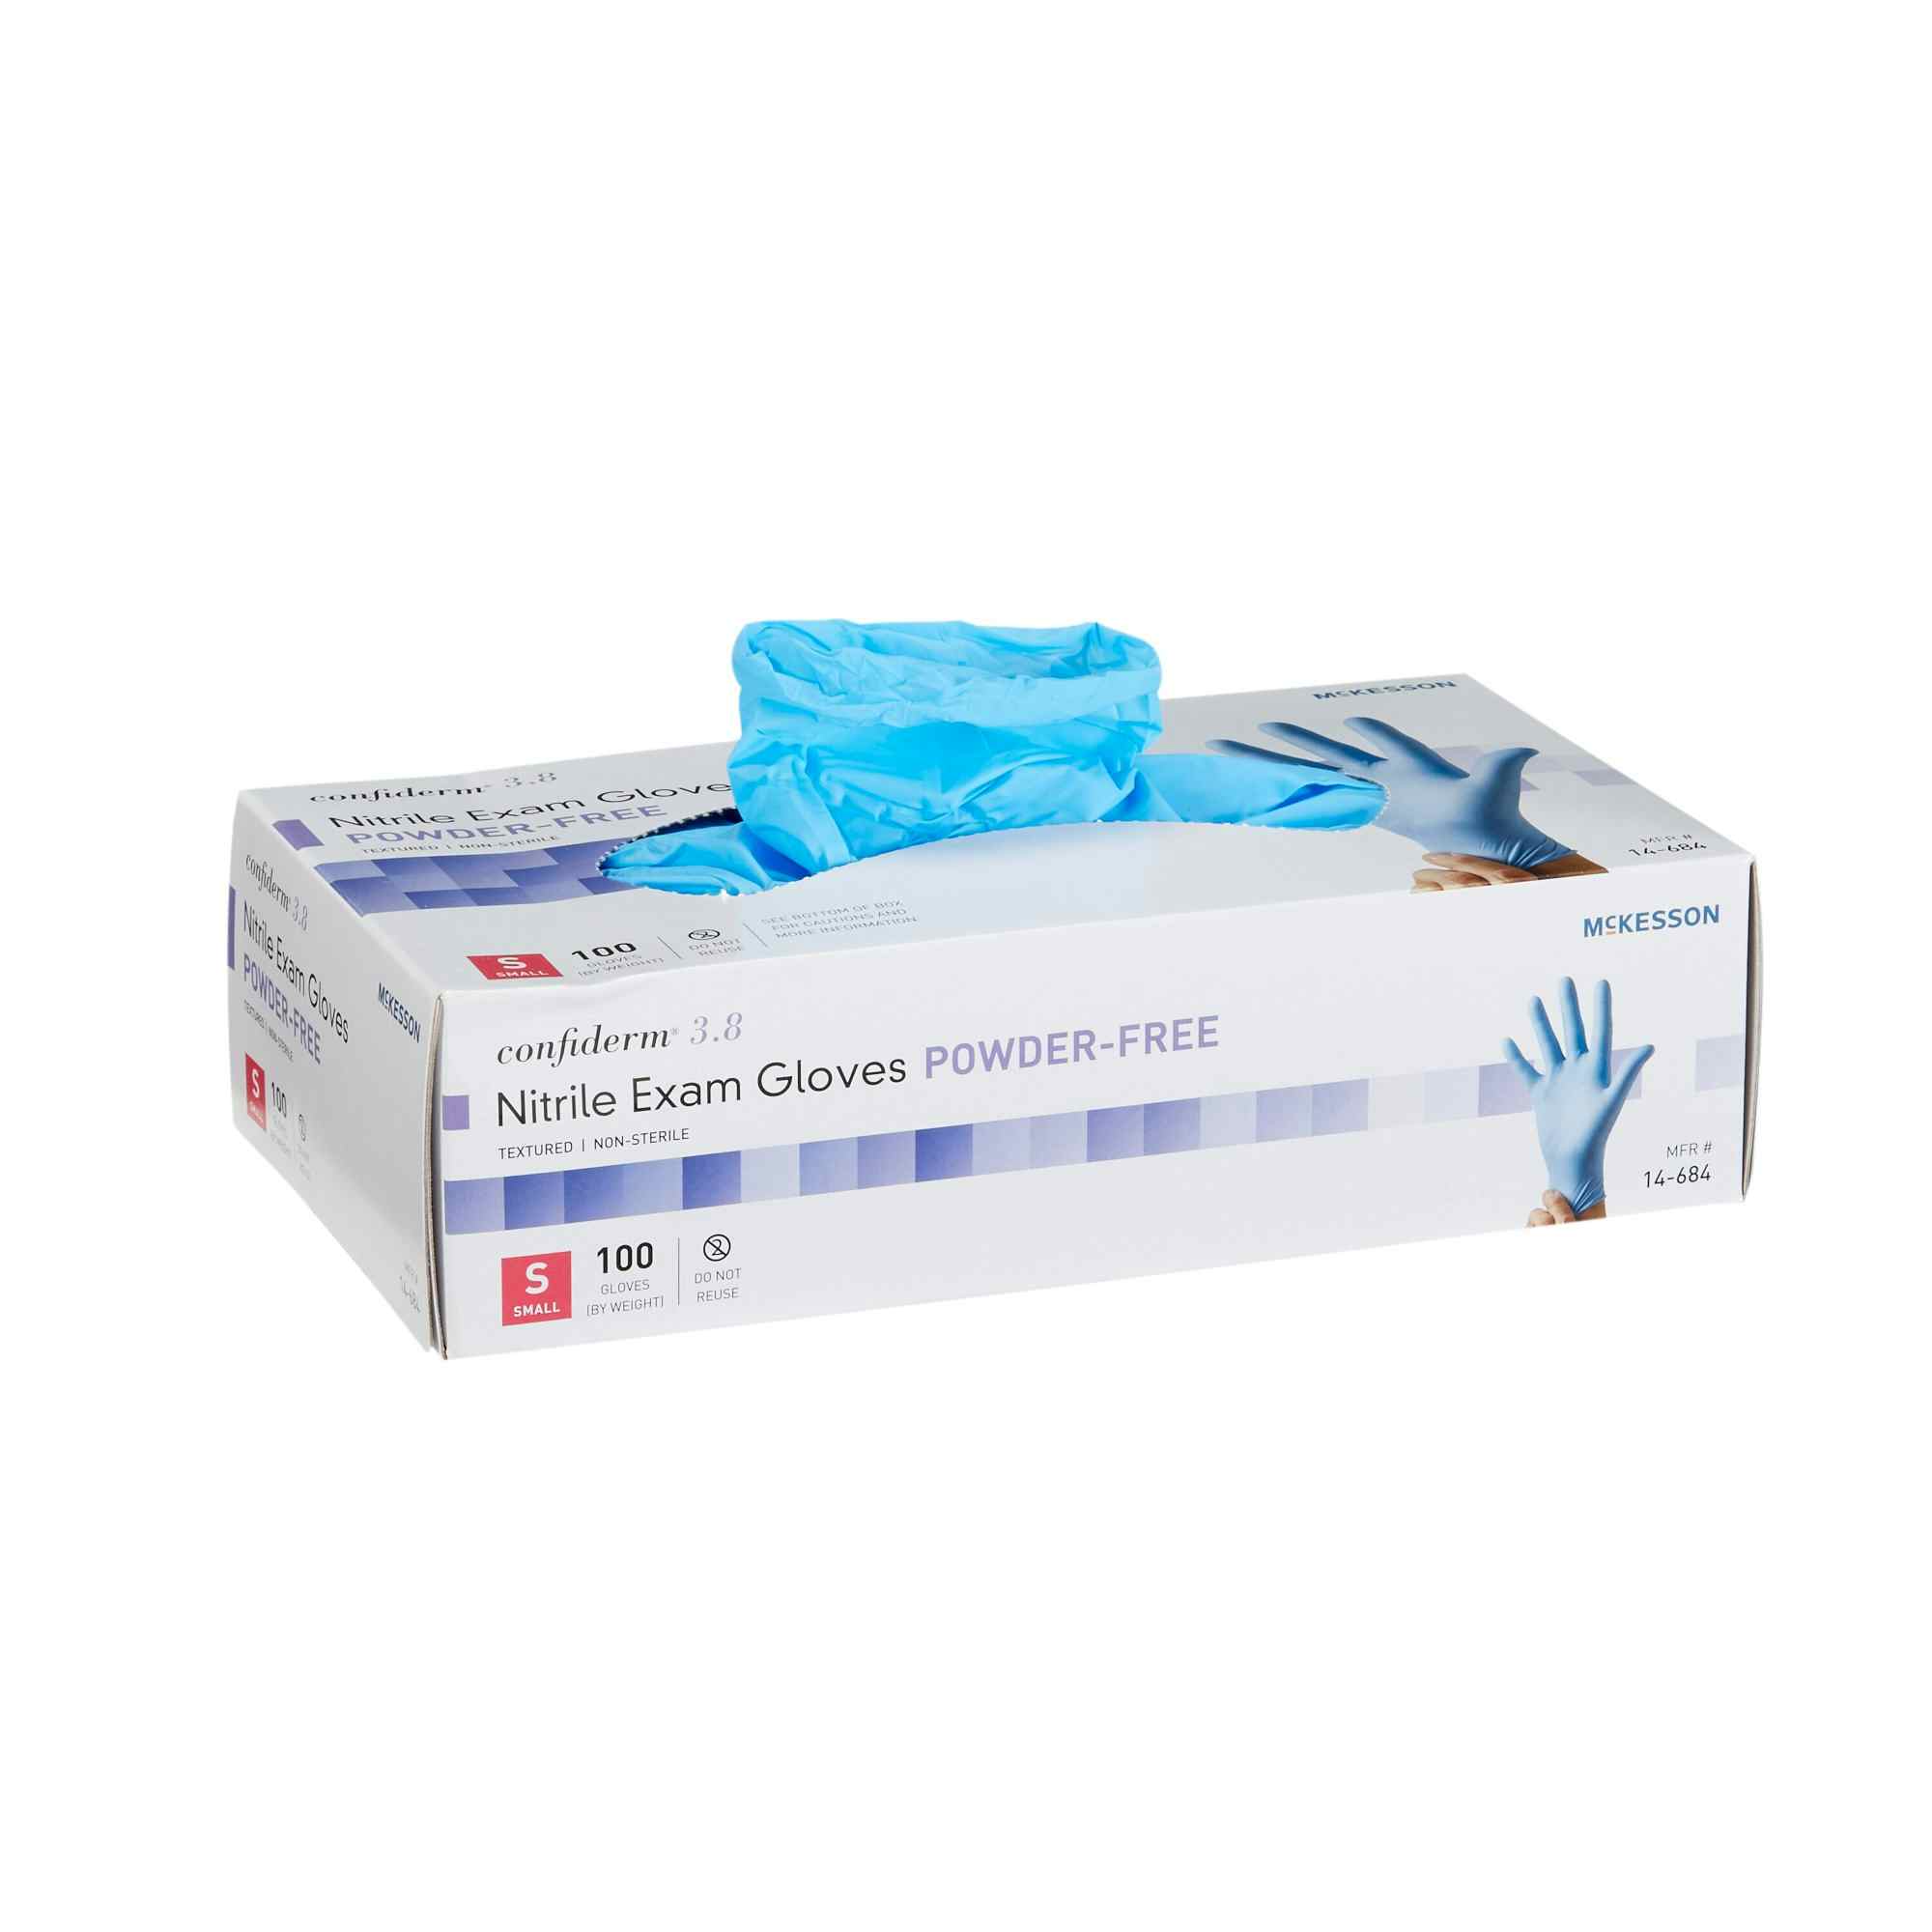 McKesson Confiderm 3.8 Powder-Free Nitrile Gloves